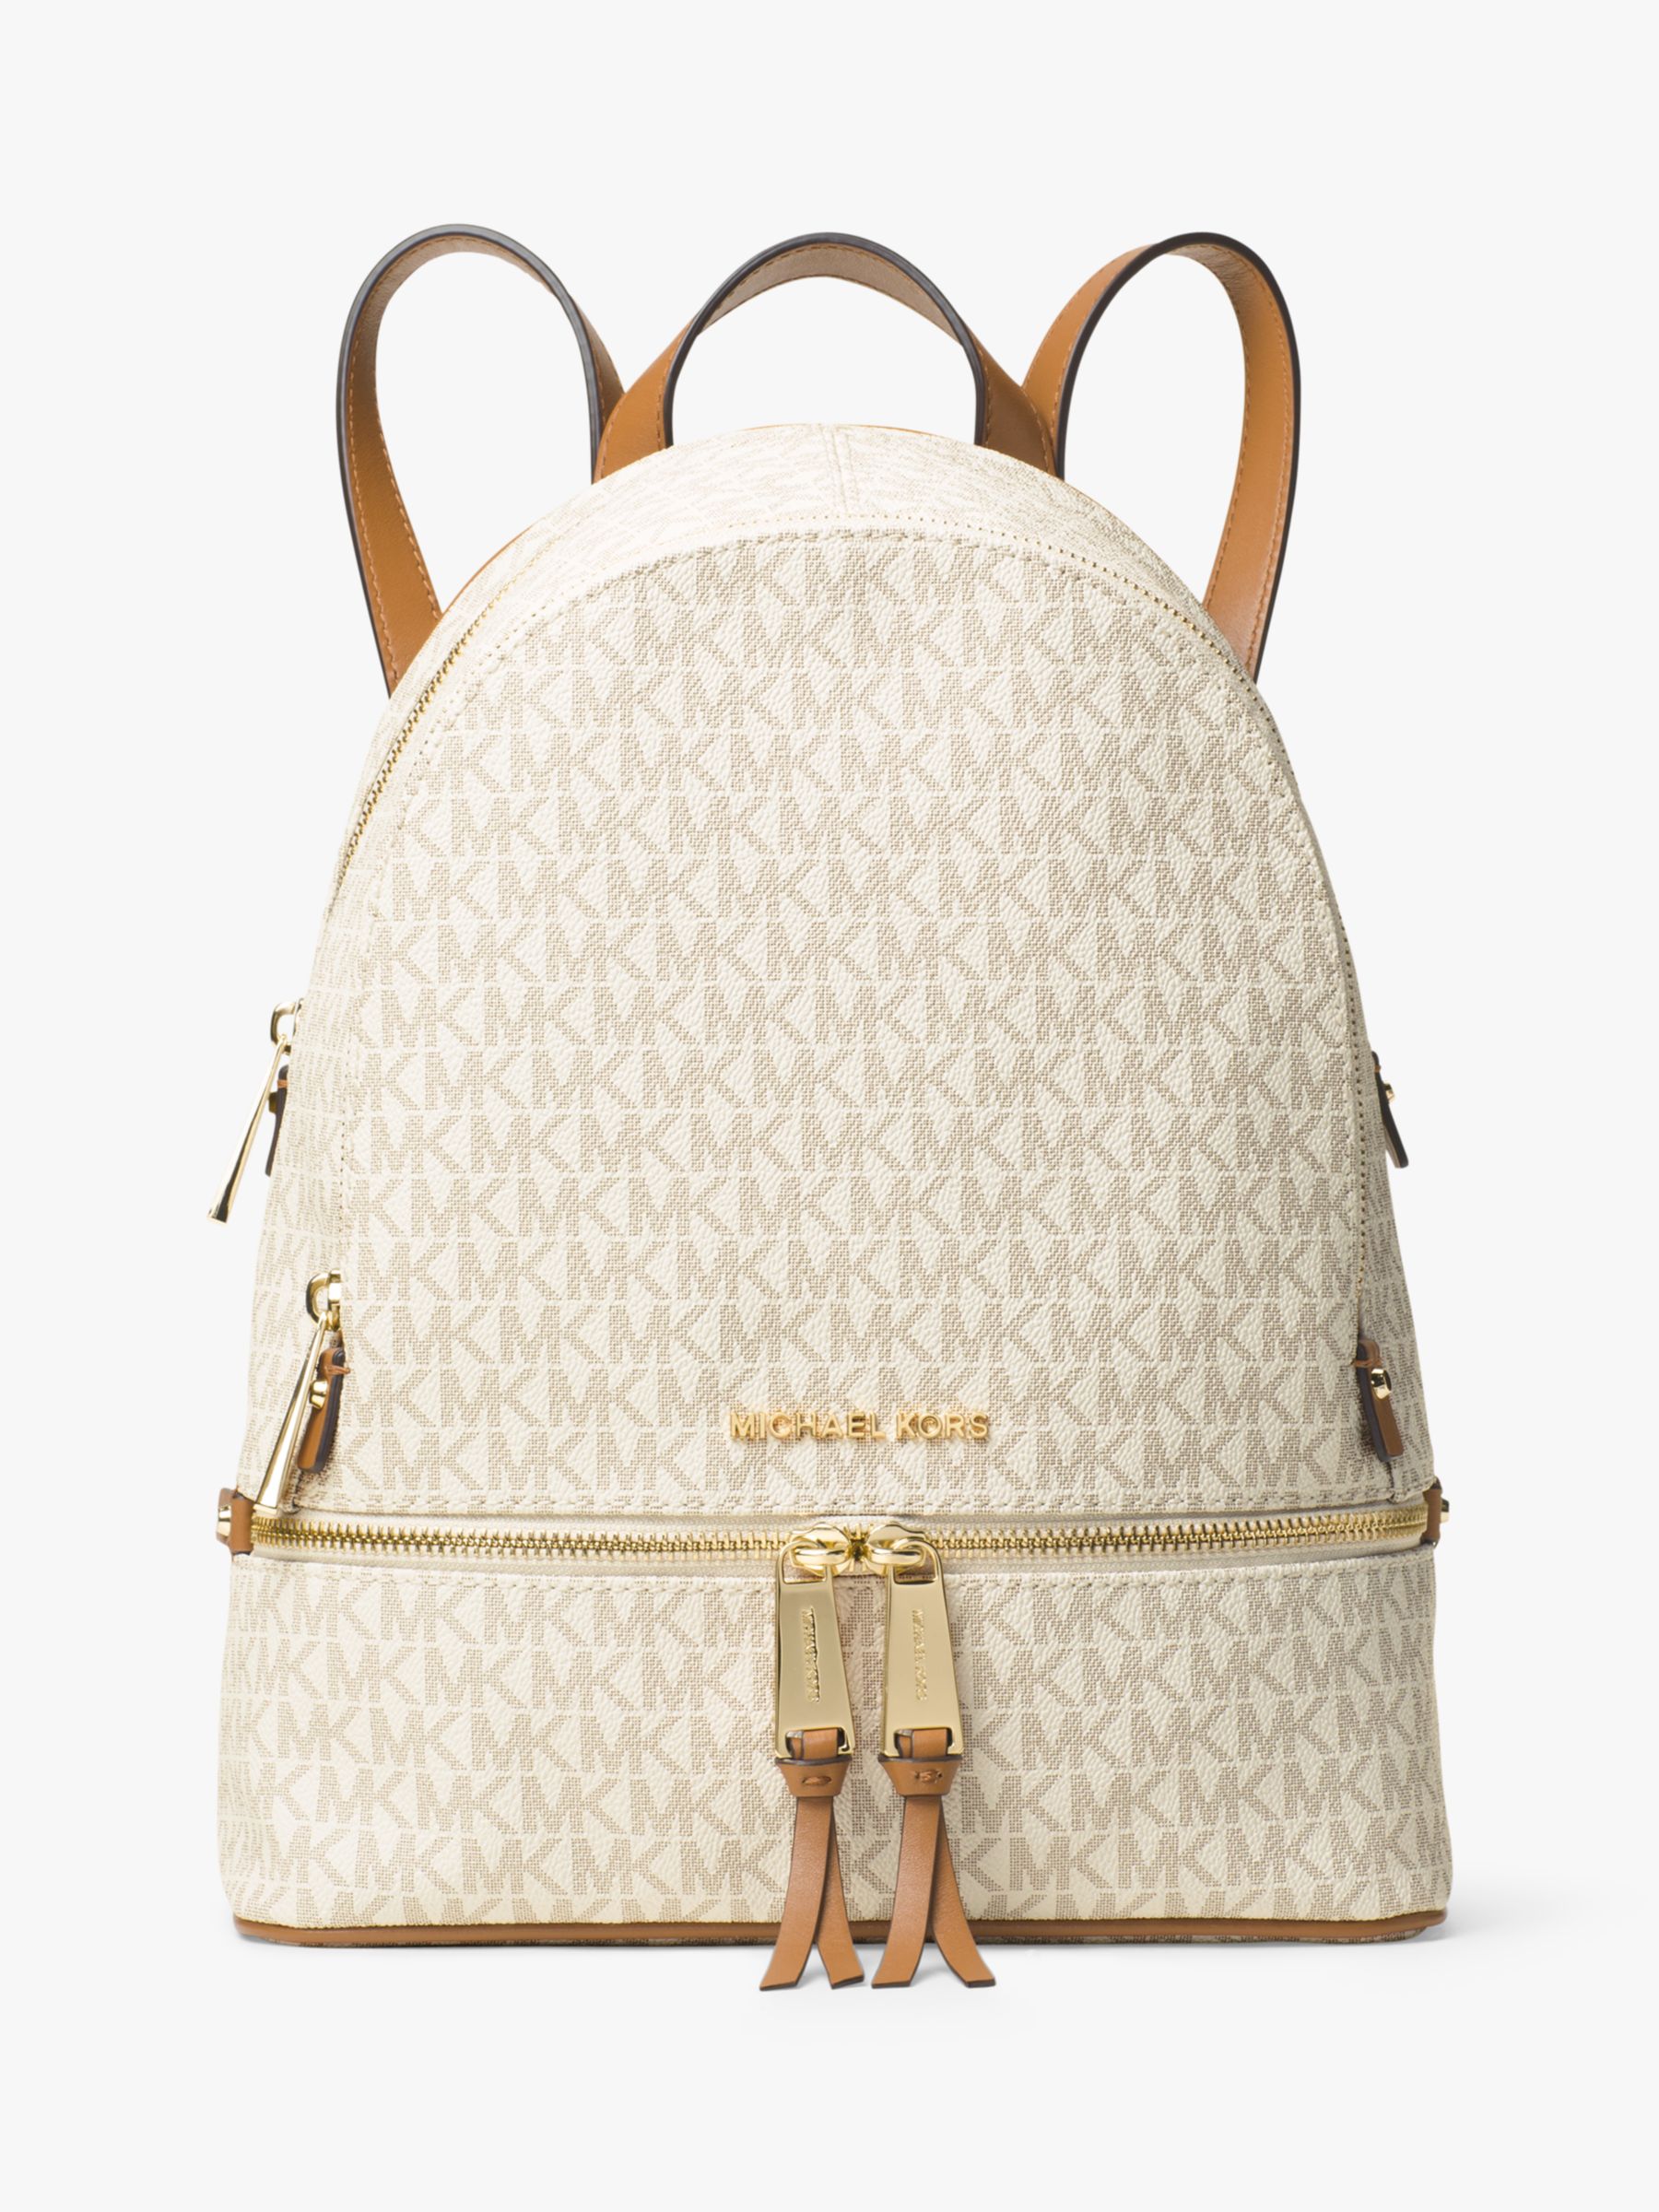 michael kors backpack vanilla